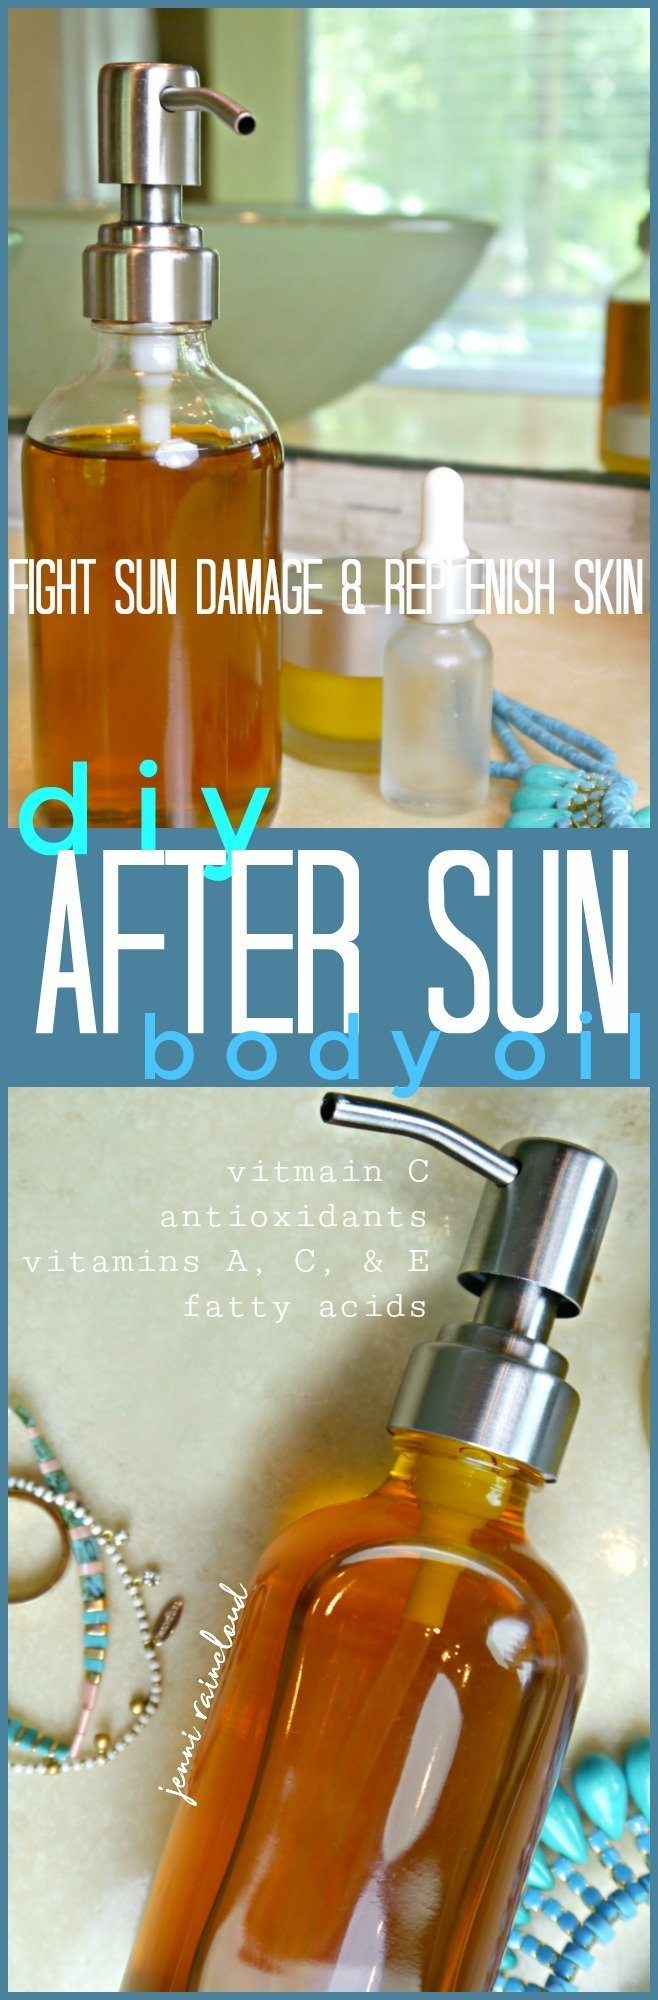 DIY After Sun Body Oil 